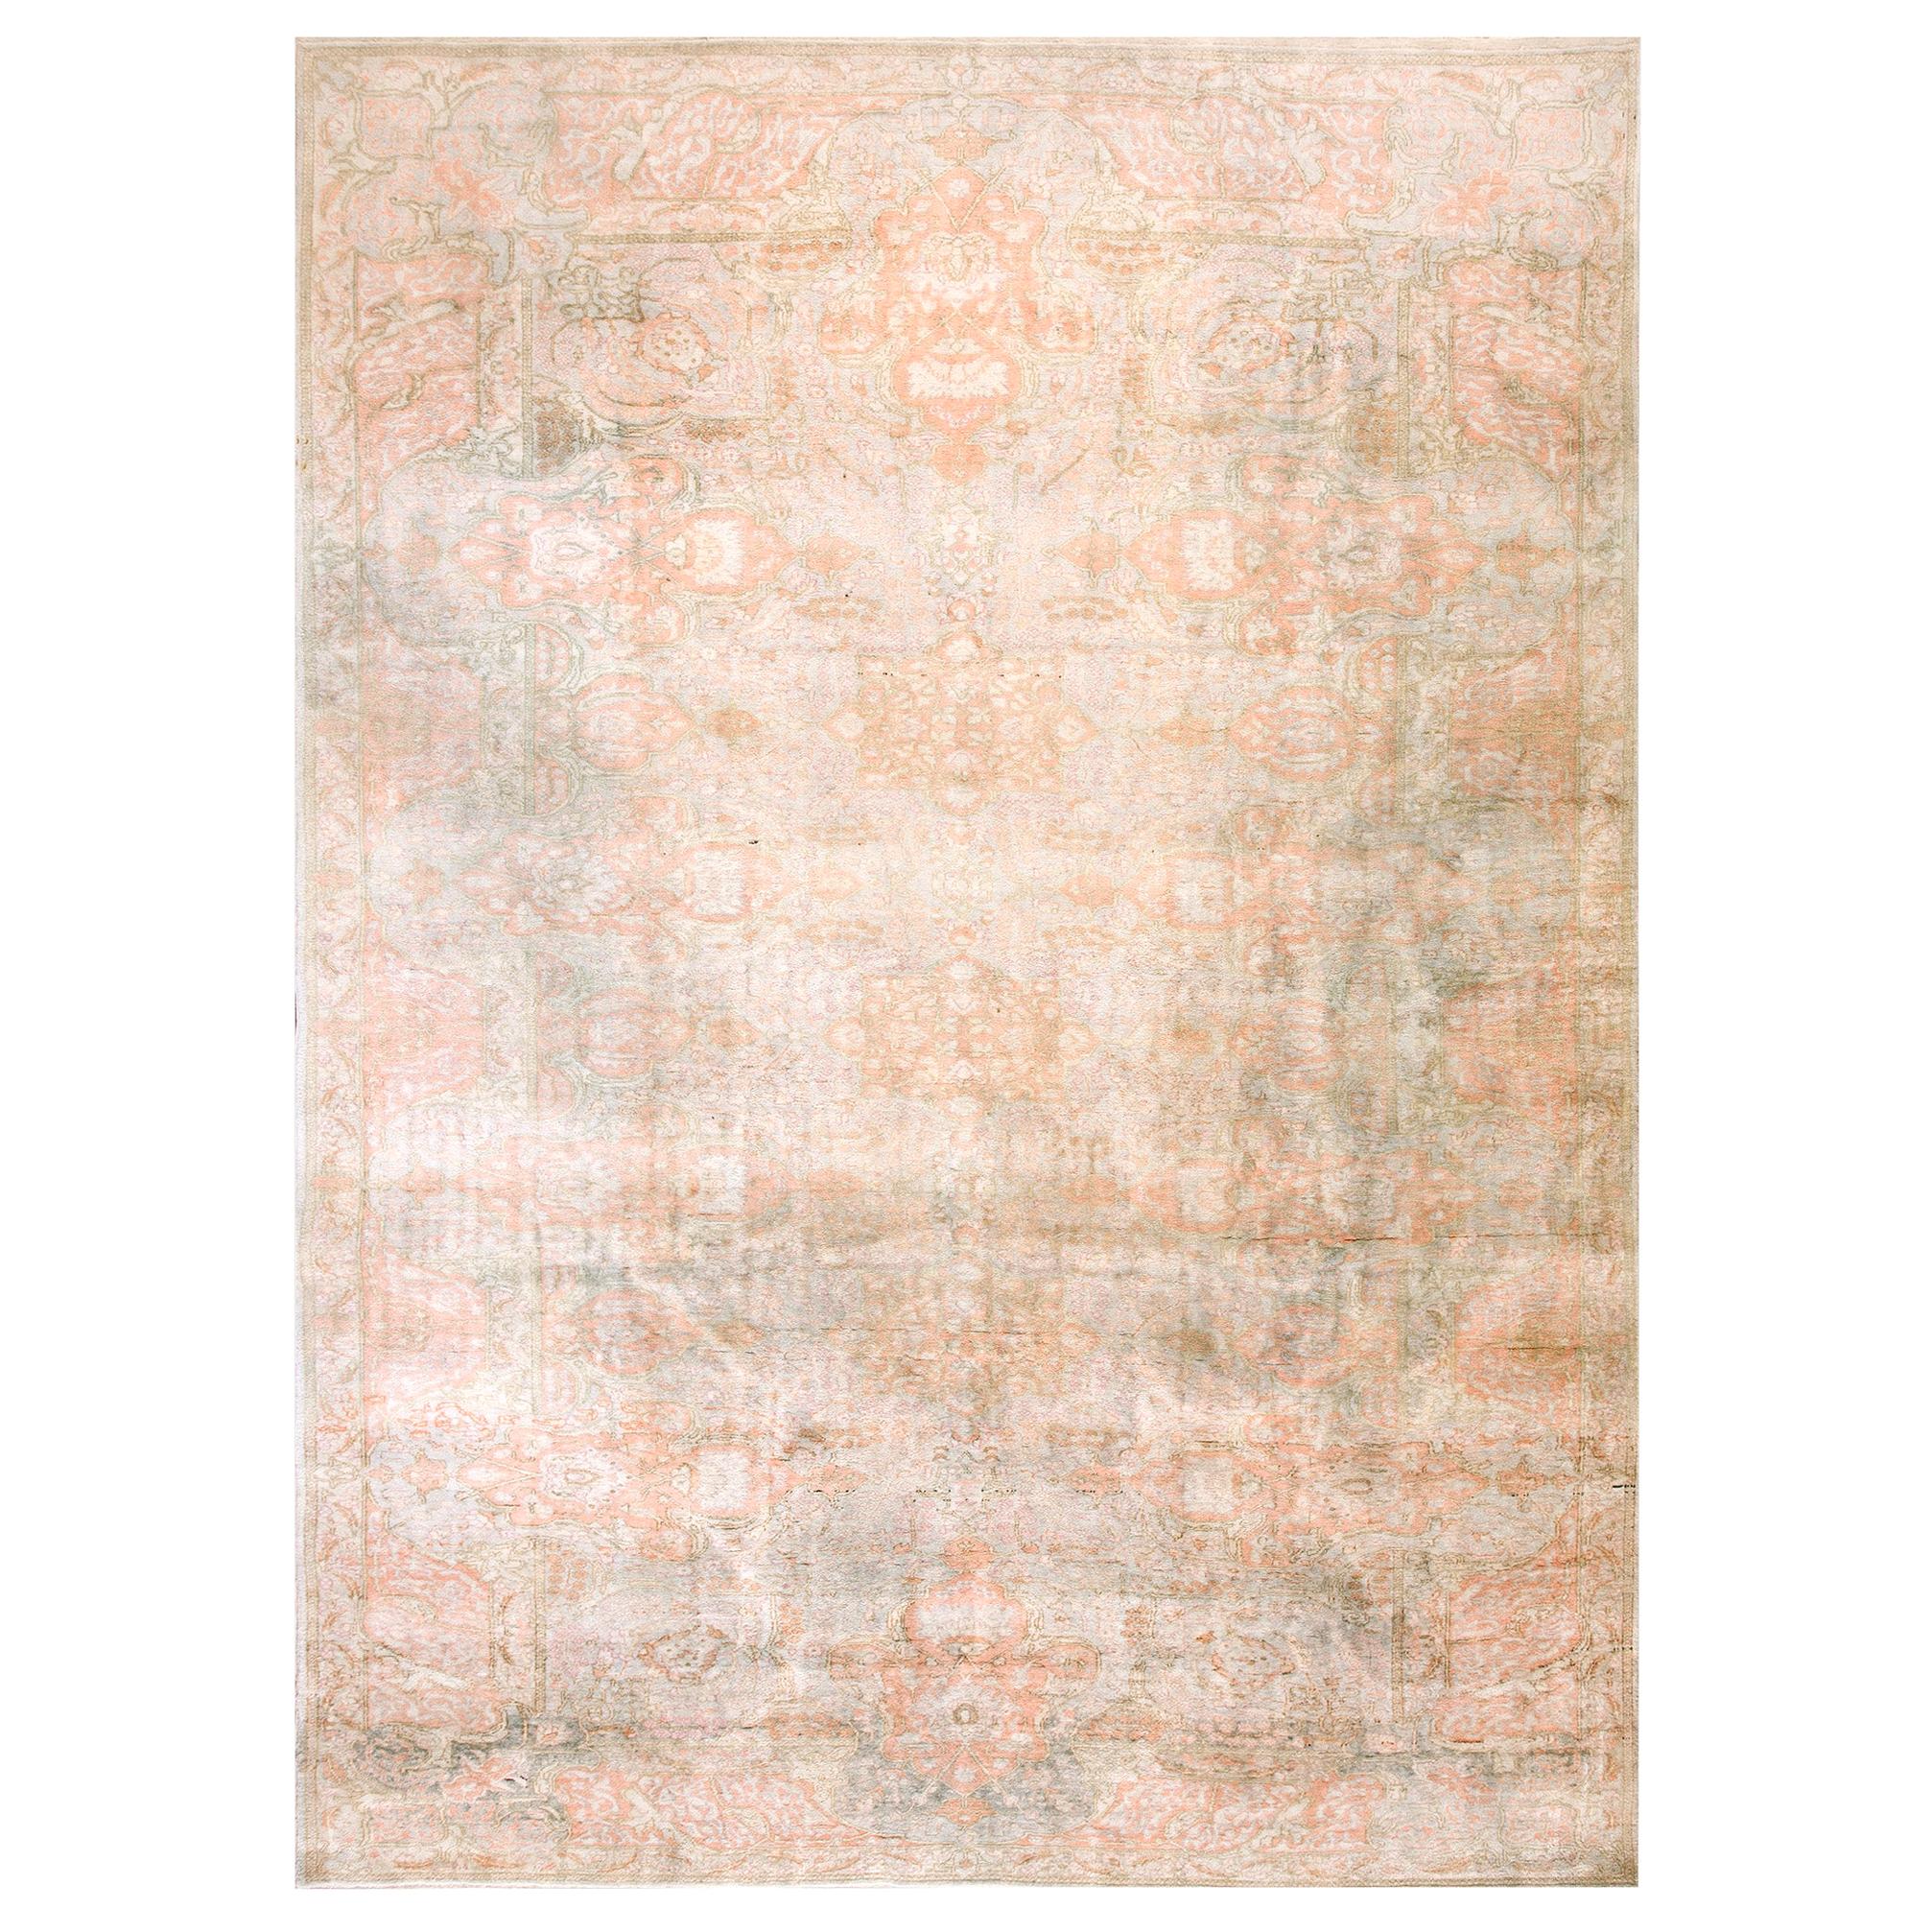 Early 20th Century Turkish Cotton Kayseri Carpet ( 9' x 12'6" - 275 x 380 ) For Sale